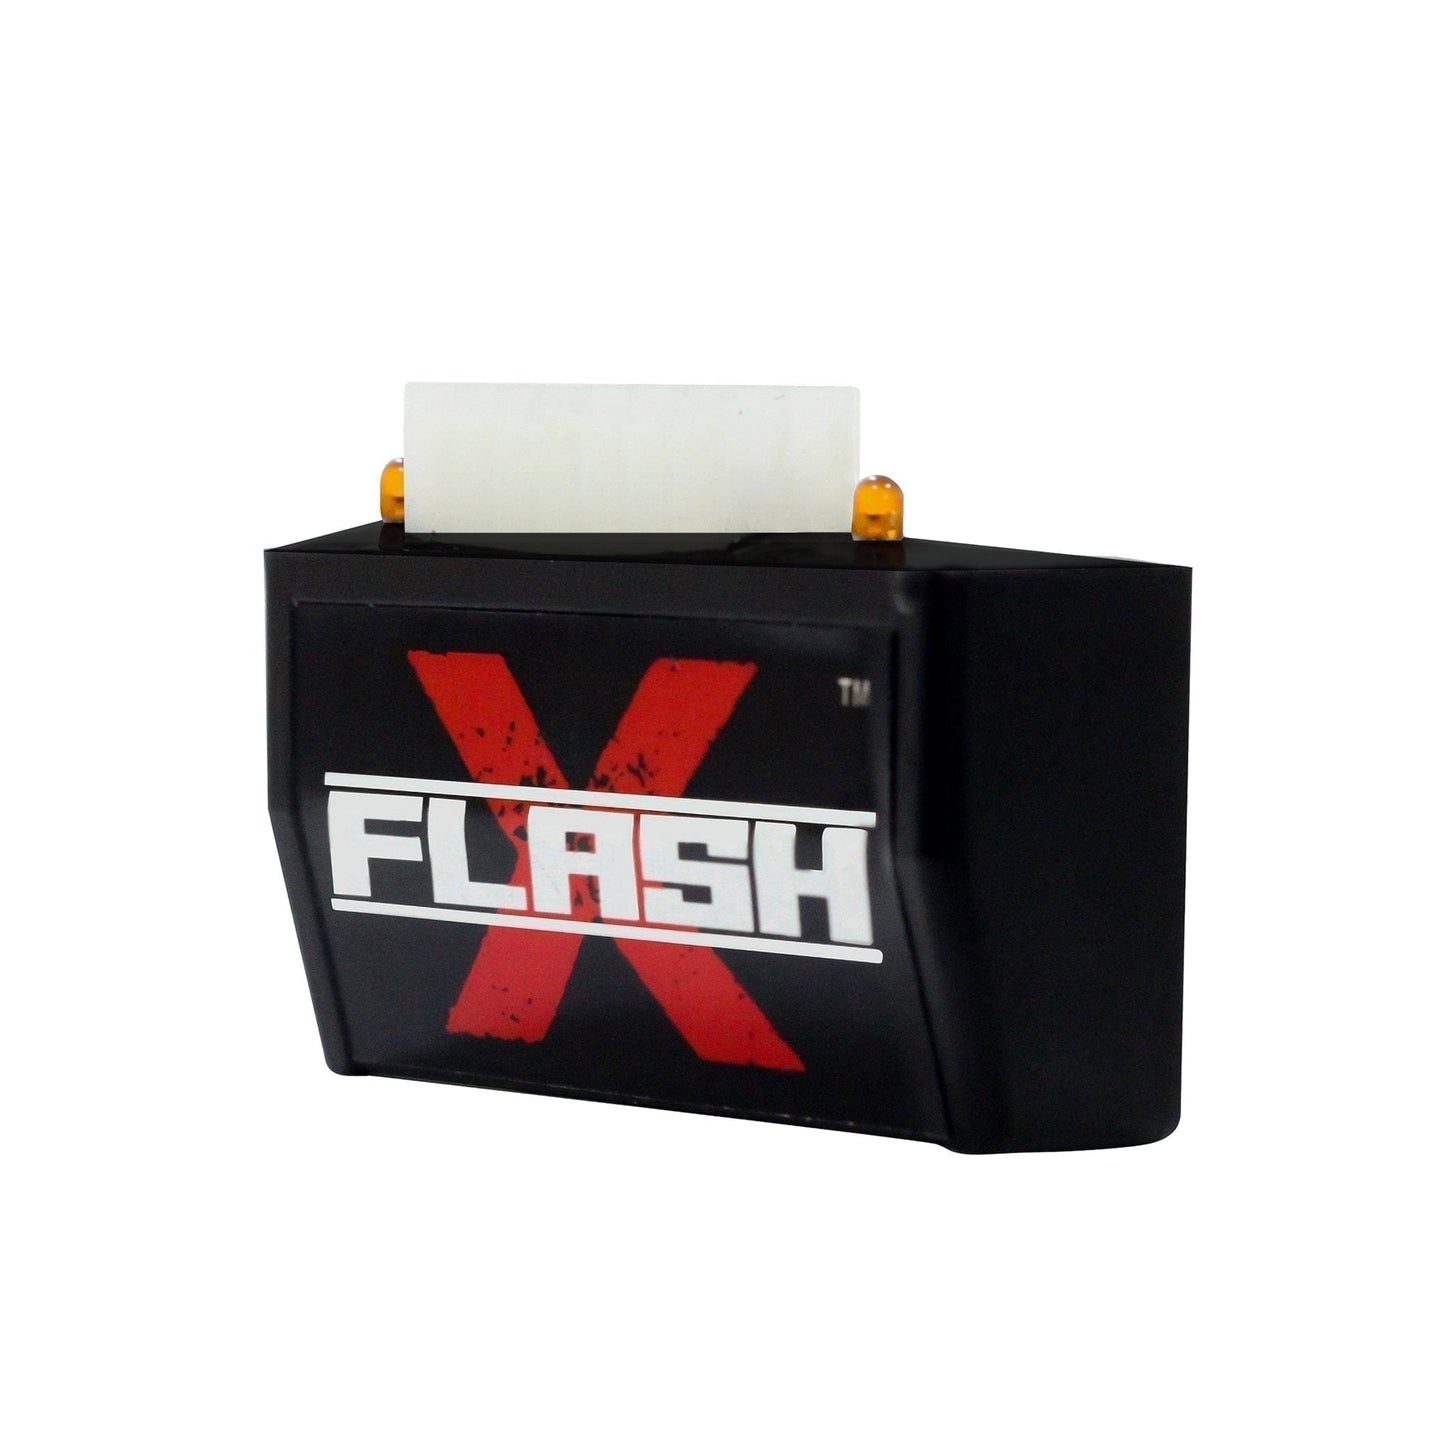 Destination Moto Husqvarna Vitpilen 250 Flash X Hazard Lights Flash Module, Blinker,Flasher